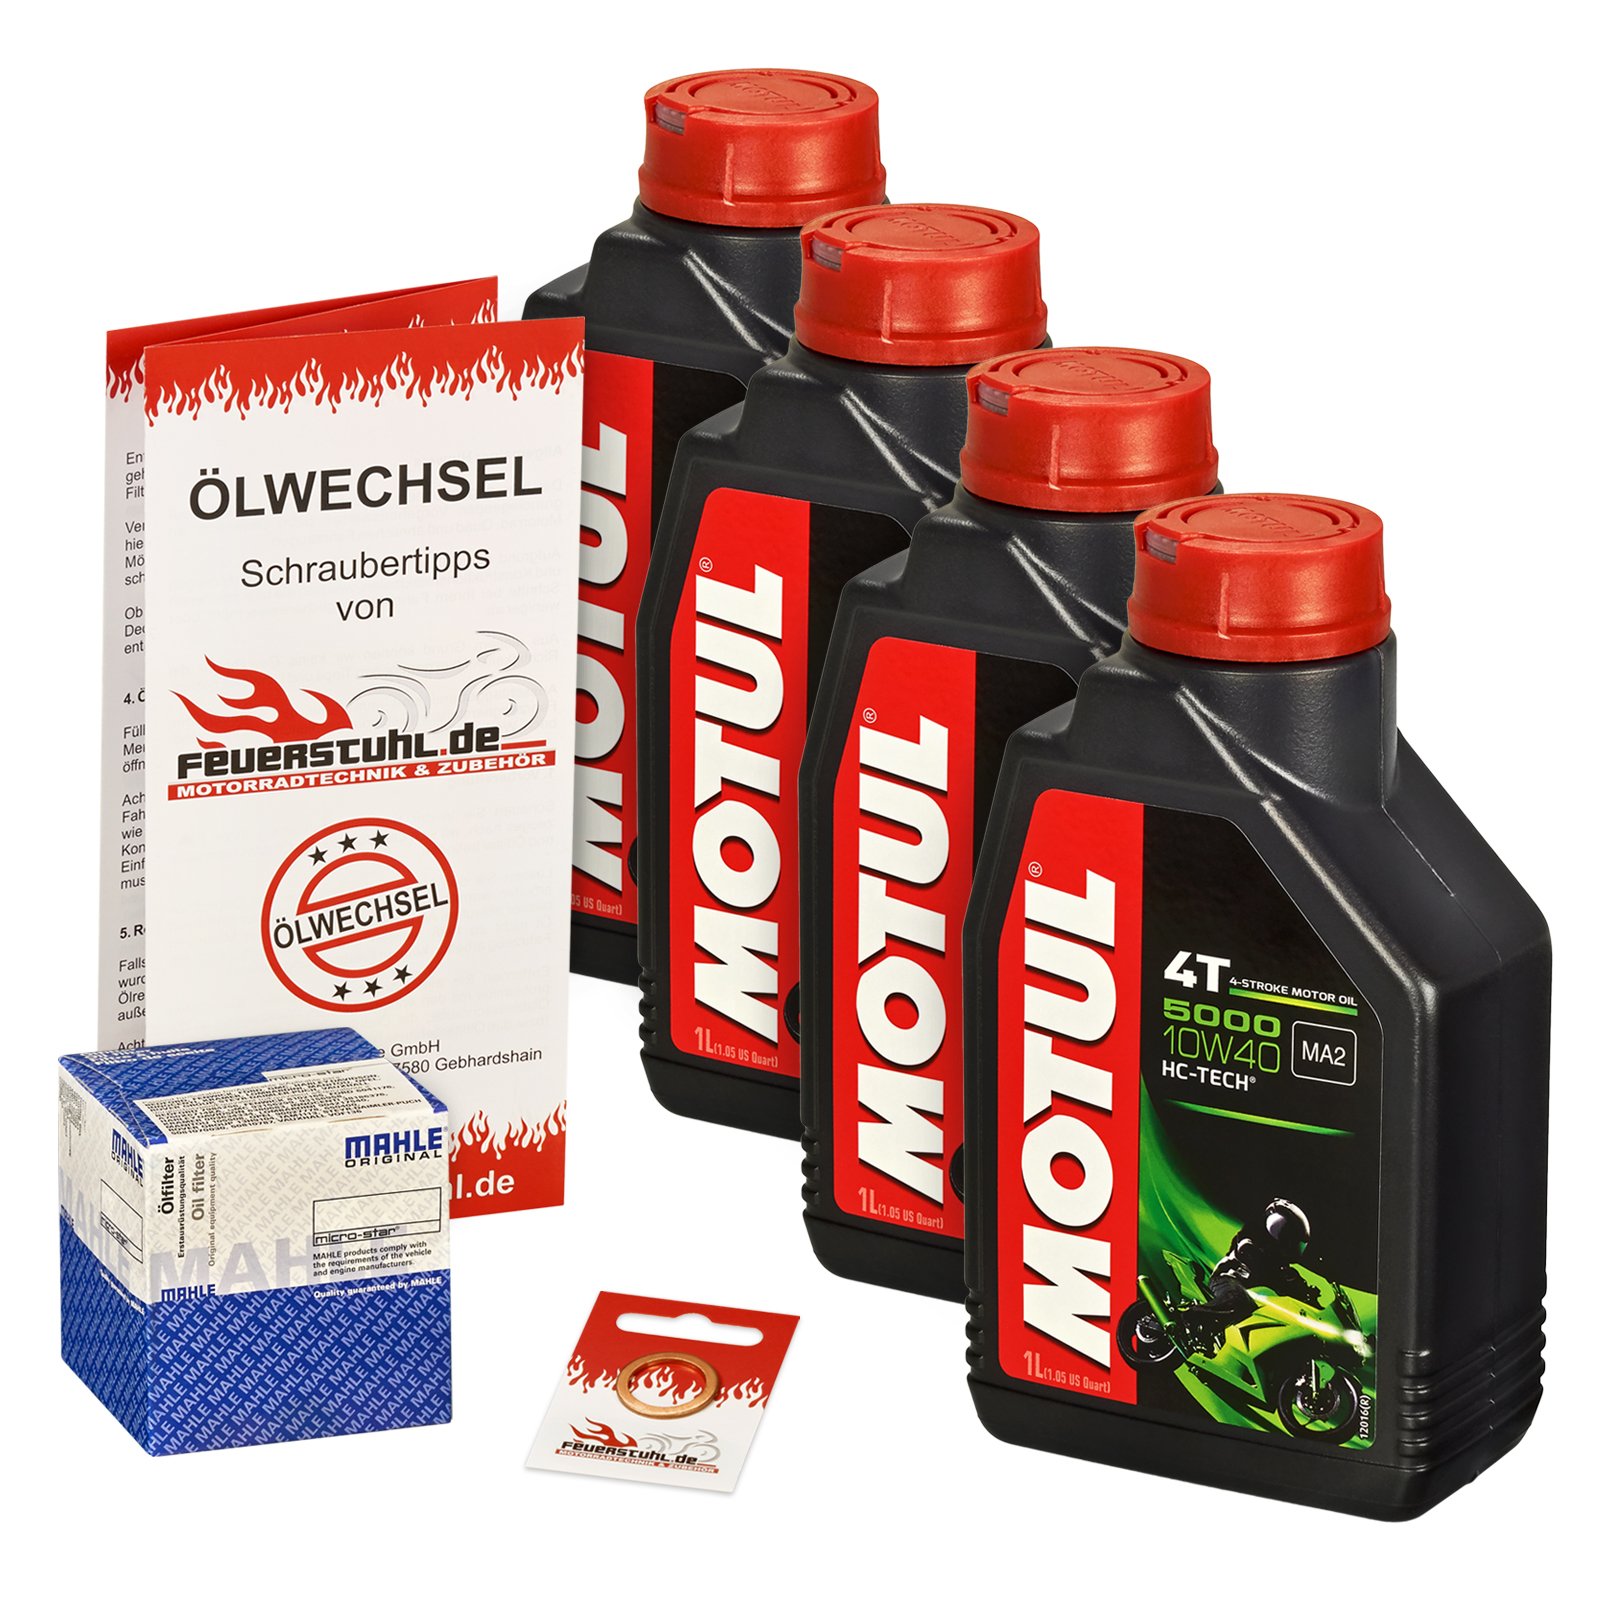 Motul 10W-40 Öl + Mahle Ölfilter für Suzuki Intruder M800, 05-11, B4 - Ölwechselset inkl. Motoröl, Filter, Dichtring von Motul